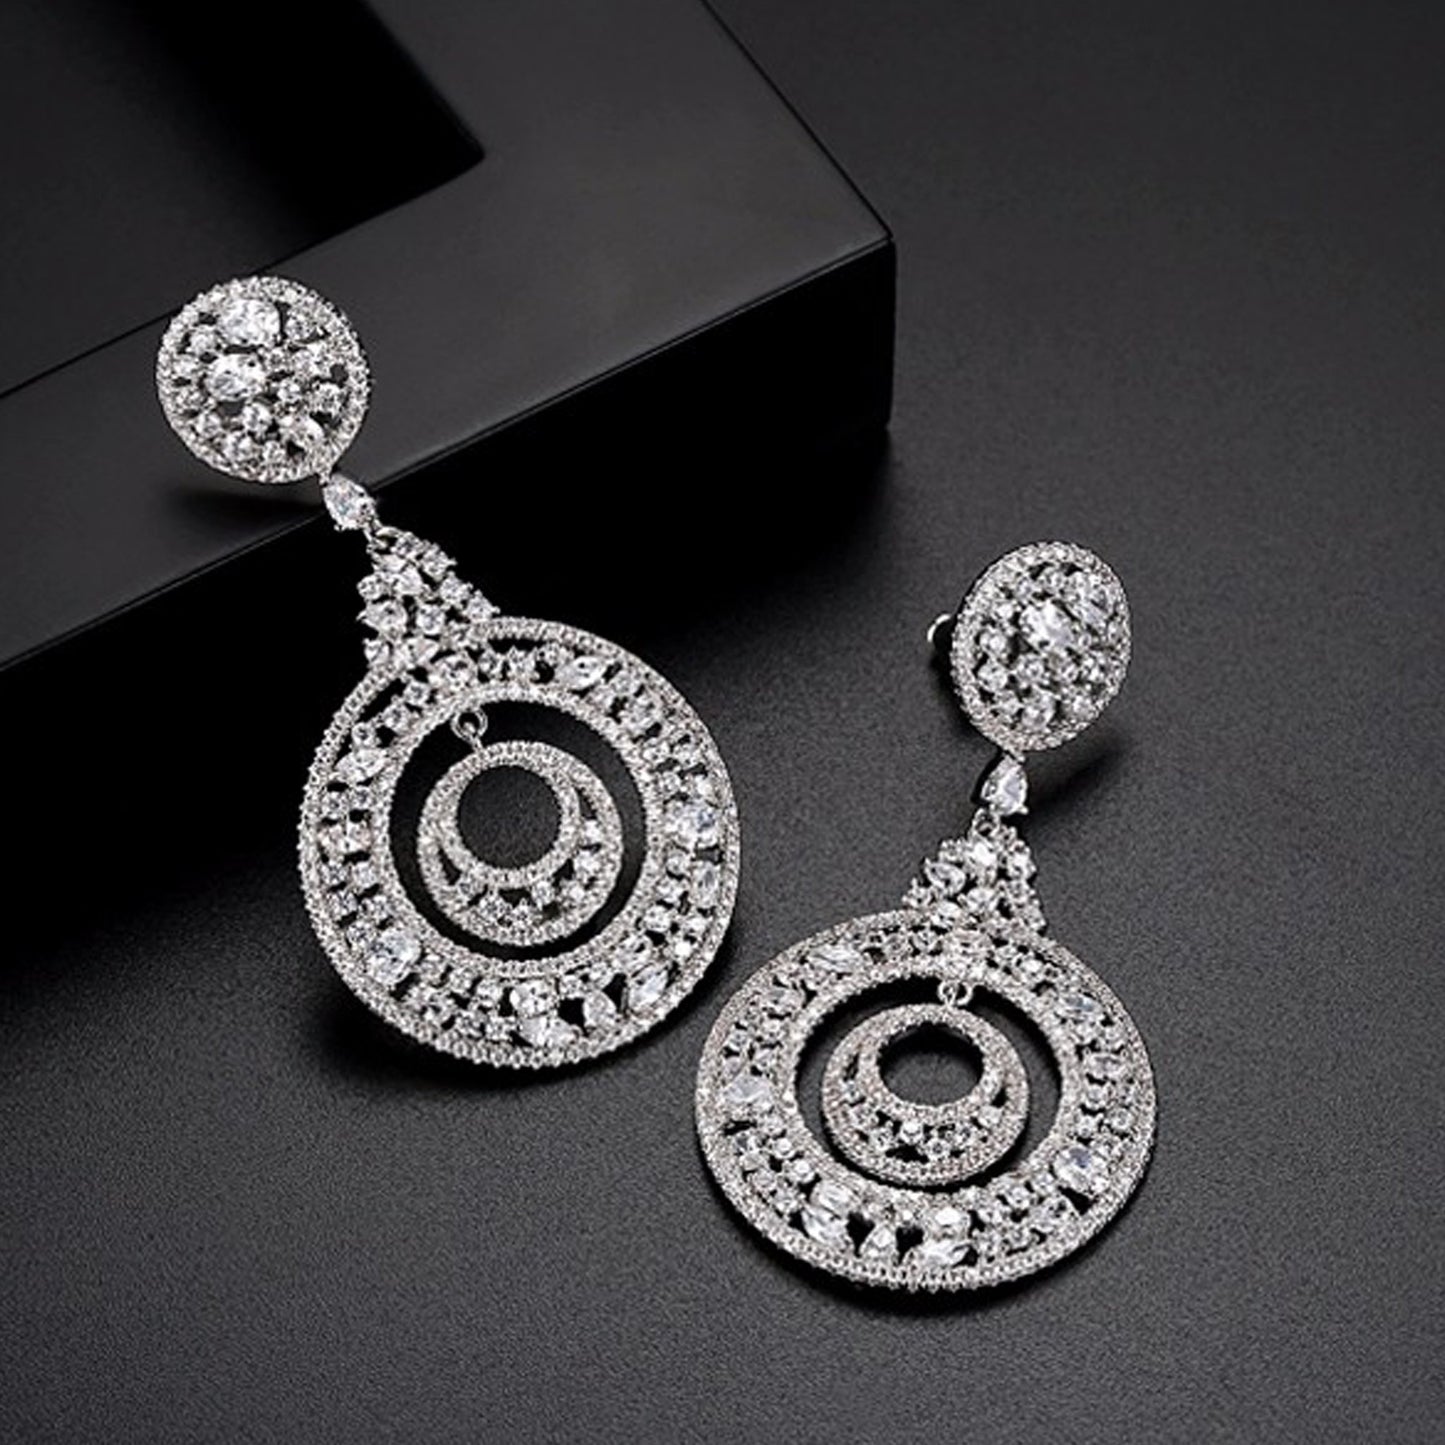 Vionnese Dangler Earrings - Kuberlo - Best Gift for - Imitation Jewellery - Designer Jewellery - one gram gold - fashion jewellery